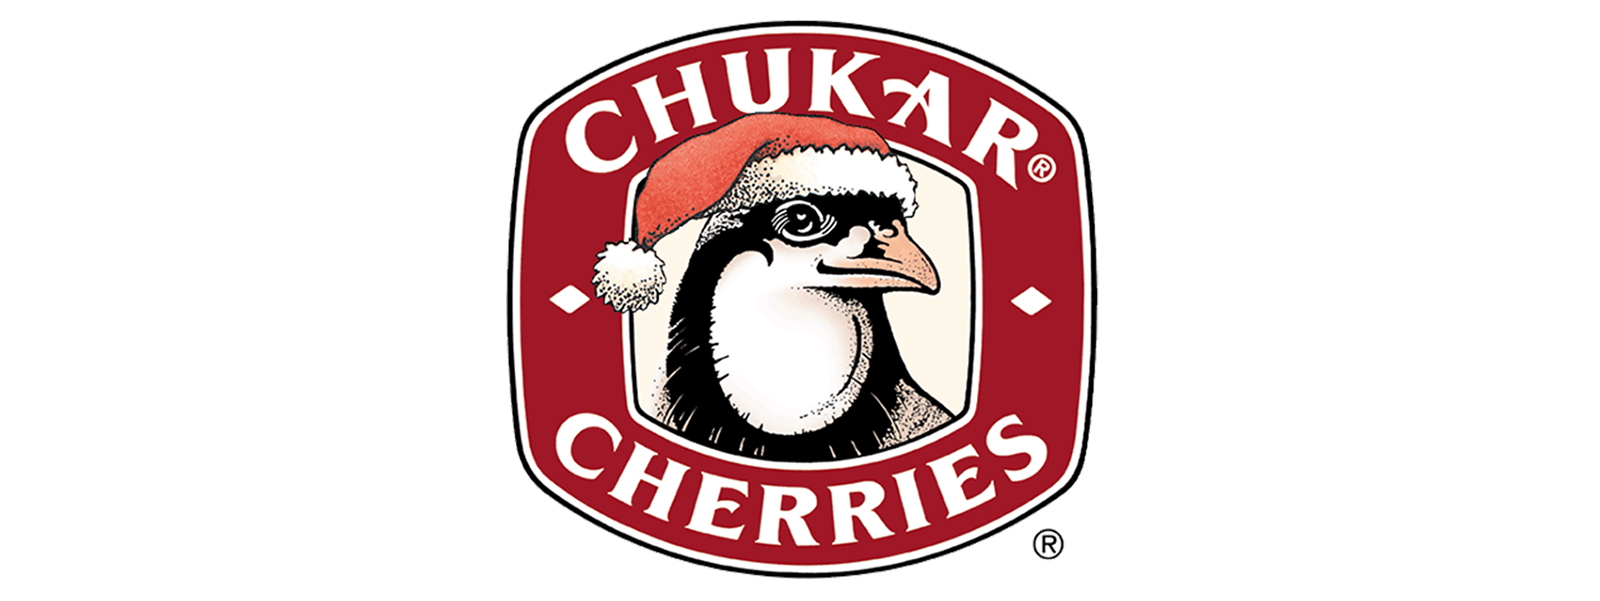 logos-Chukar Cherries